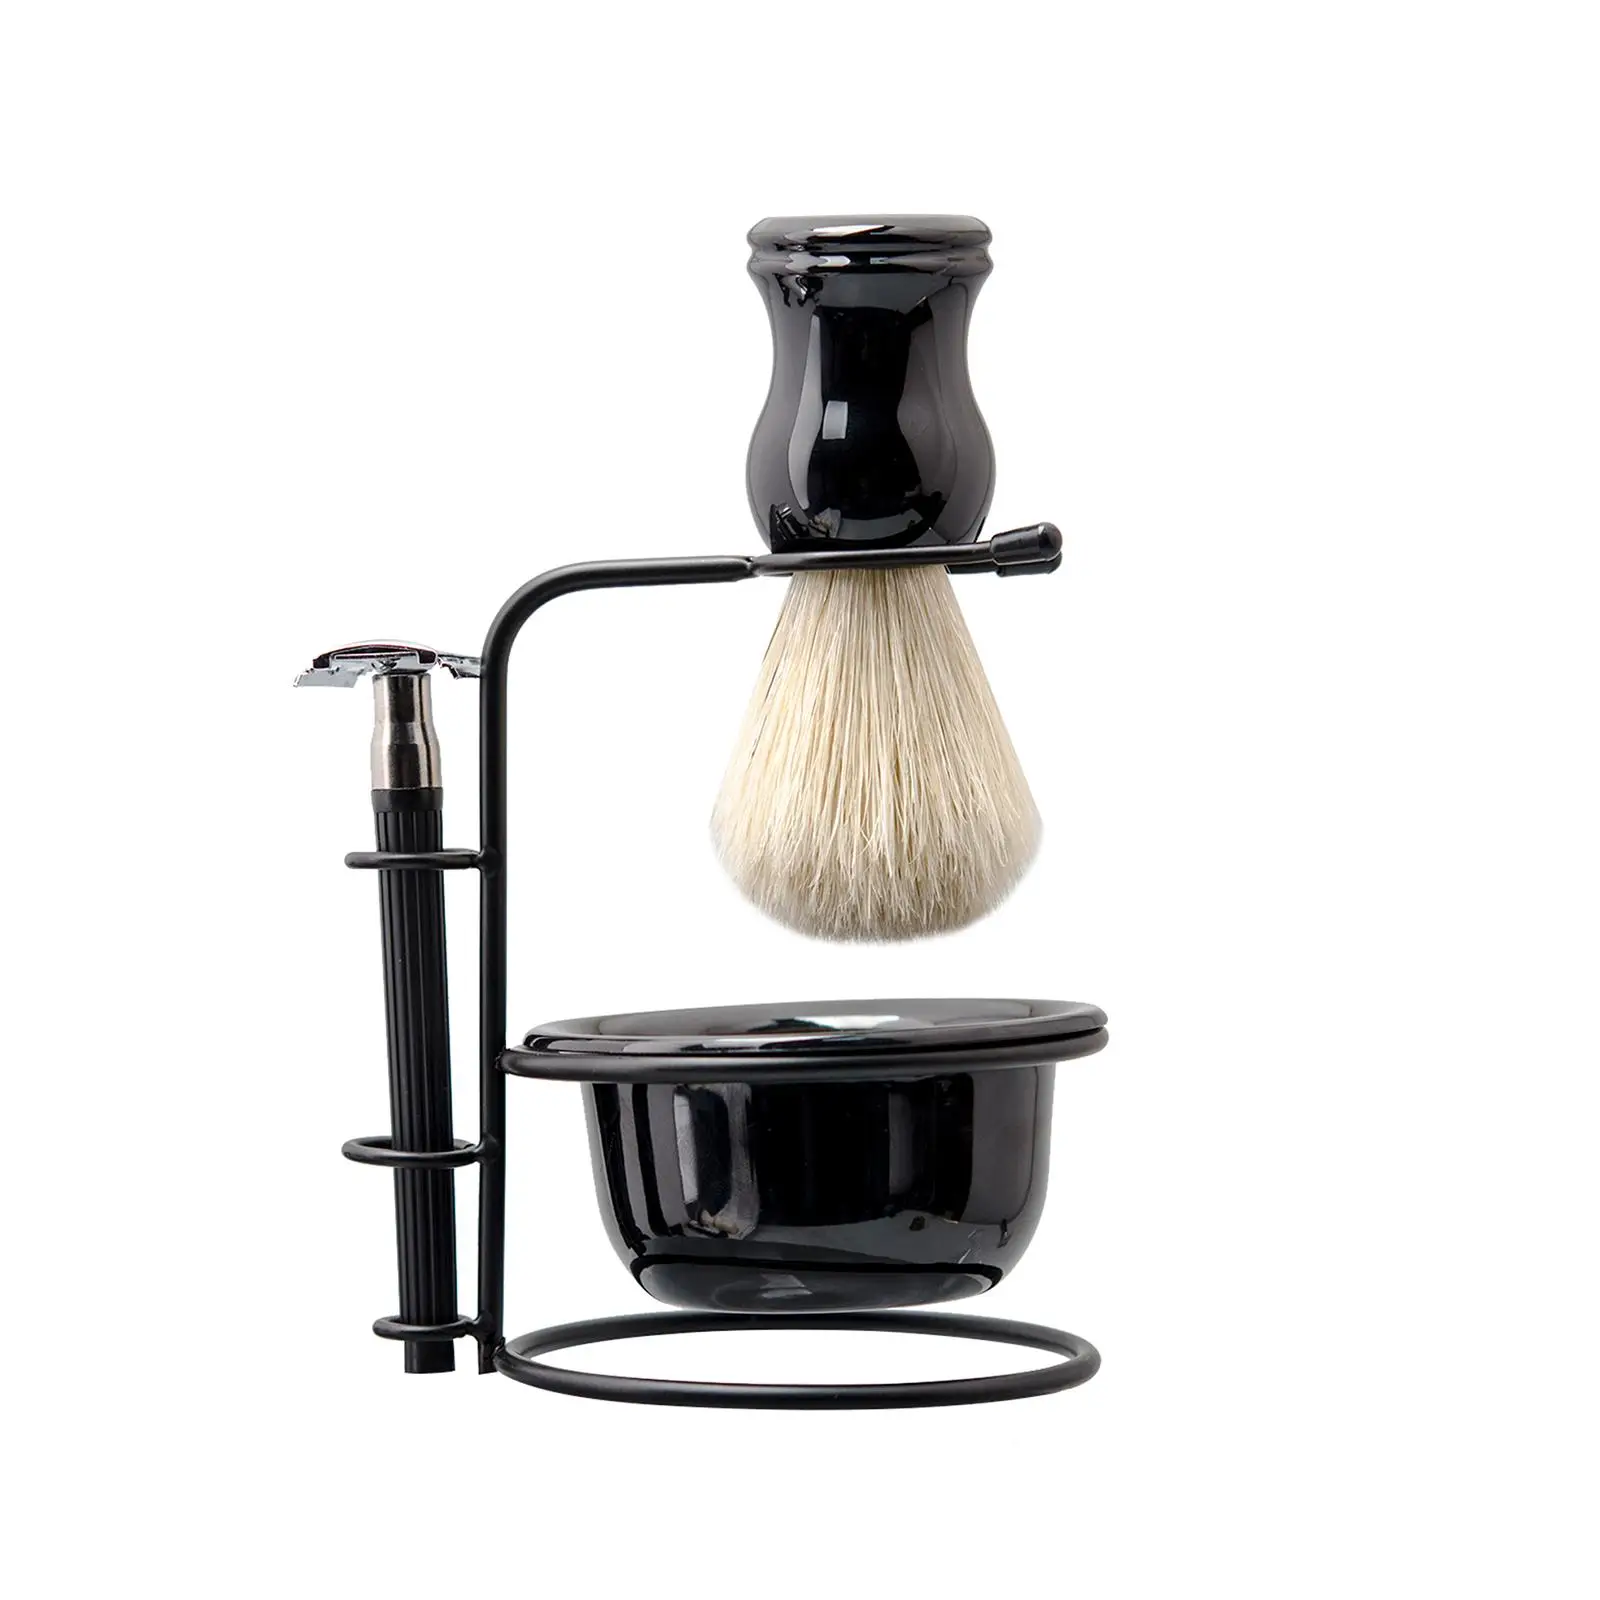 4 in 1 Shaving Set Premium Sturdy Shaving Bowl Razor Razor Shaving Kit Shaving Brush Set Perfect for Every Day Use Shaving Stand